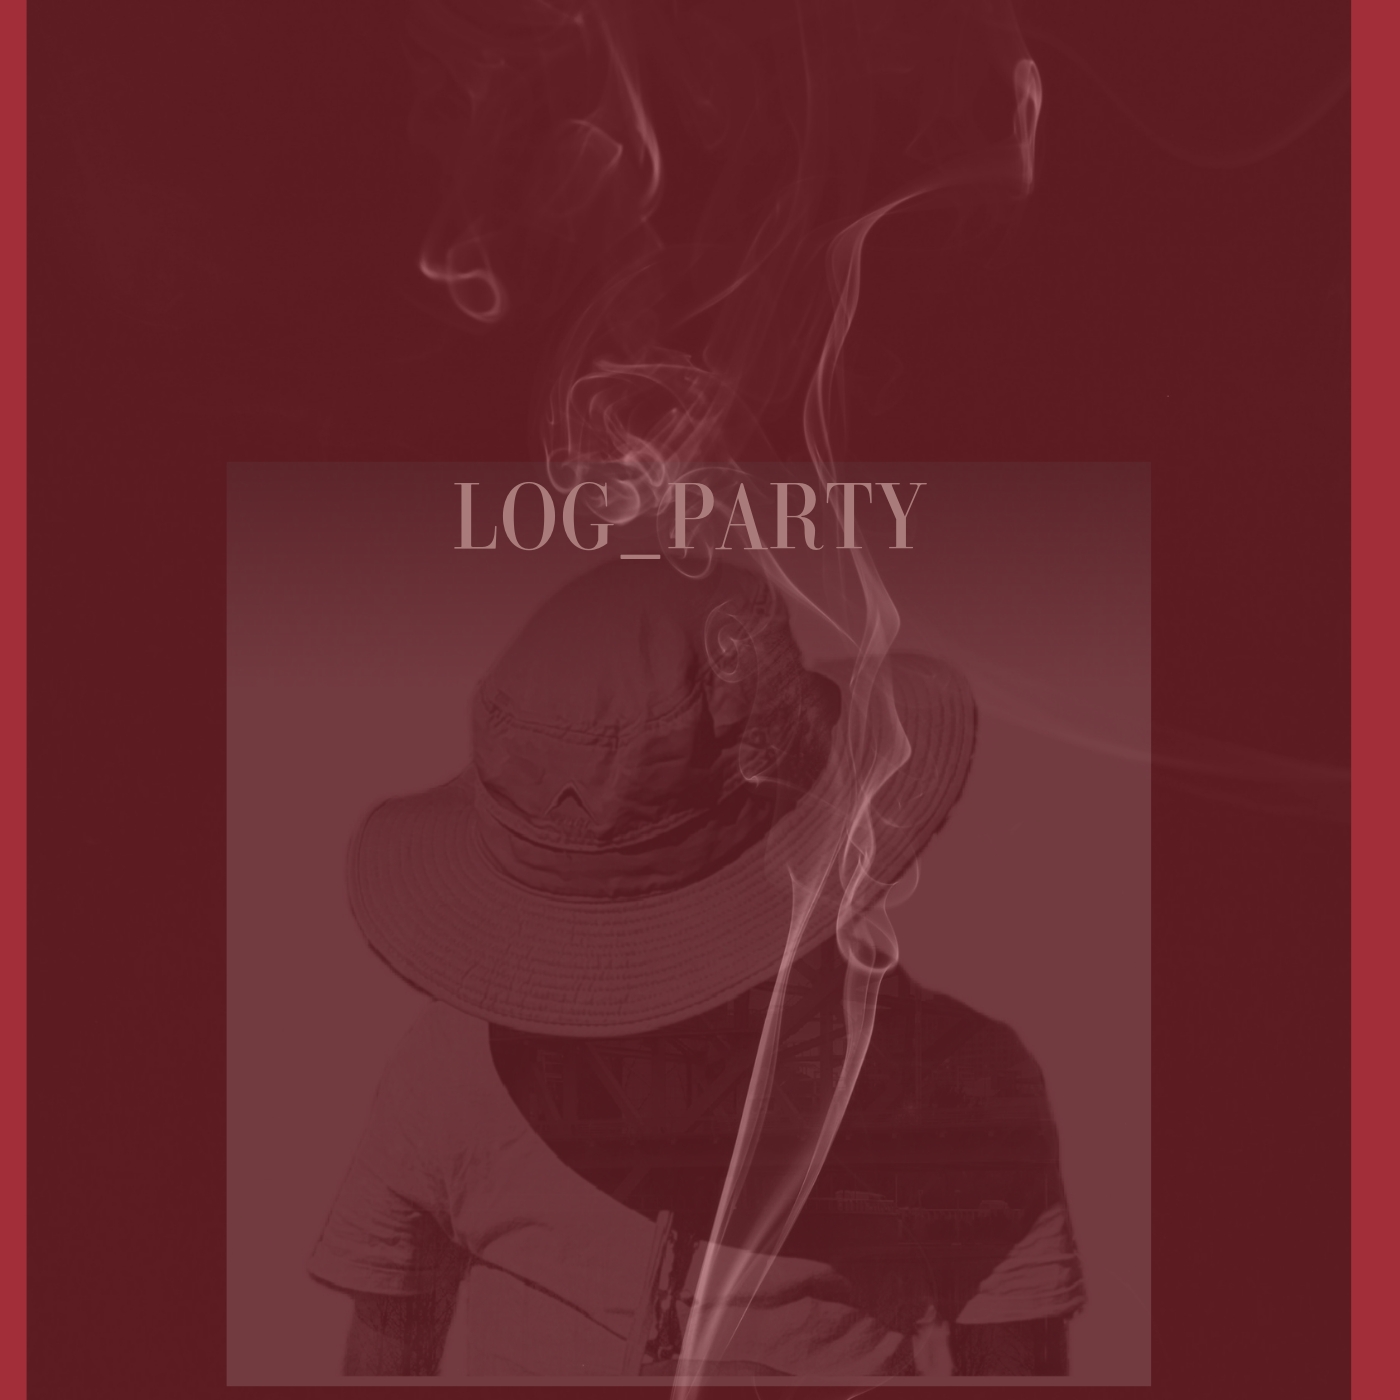 Log_party - DiaGo_Musiq